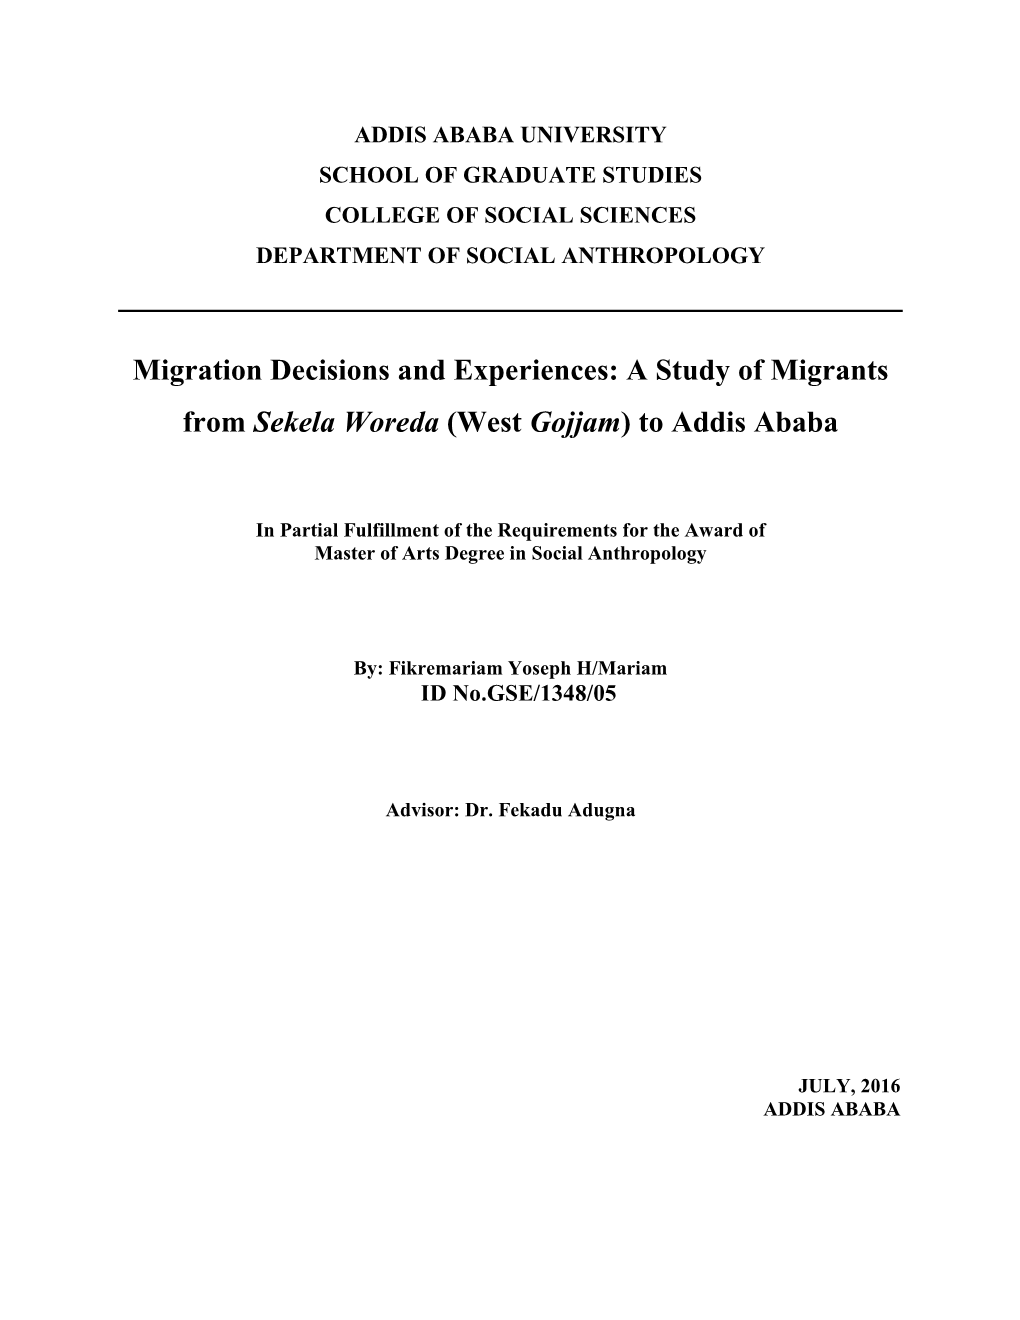 A Study of Migrants from Sekela Woreda (West Gojjam) to Addis Ababa